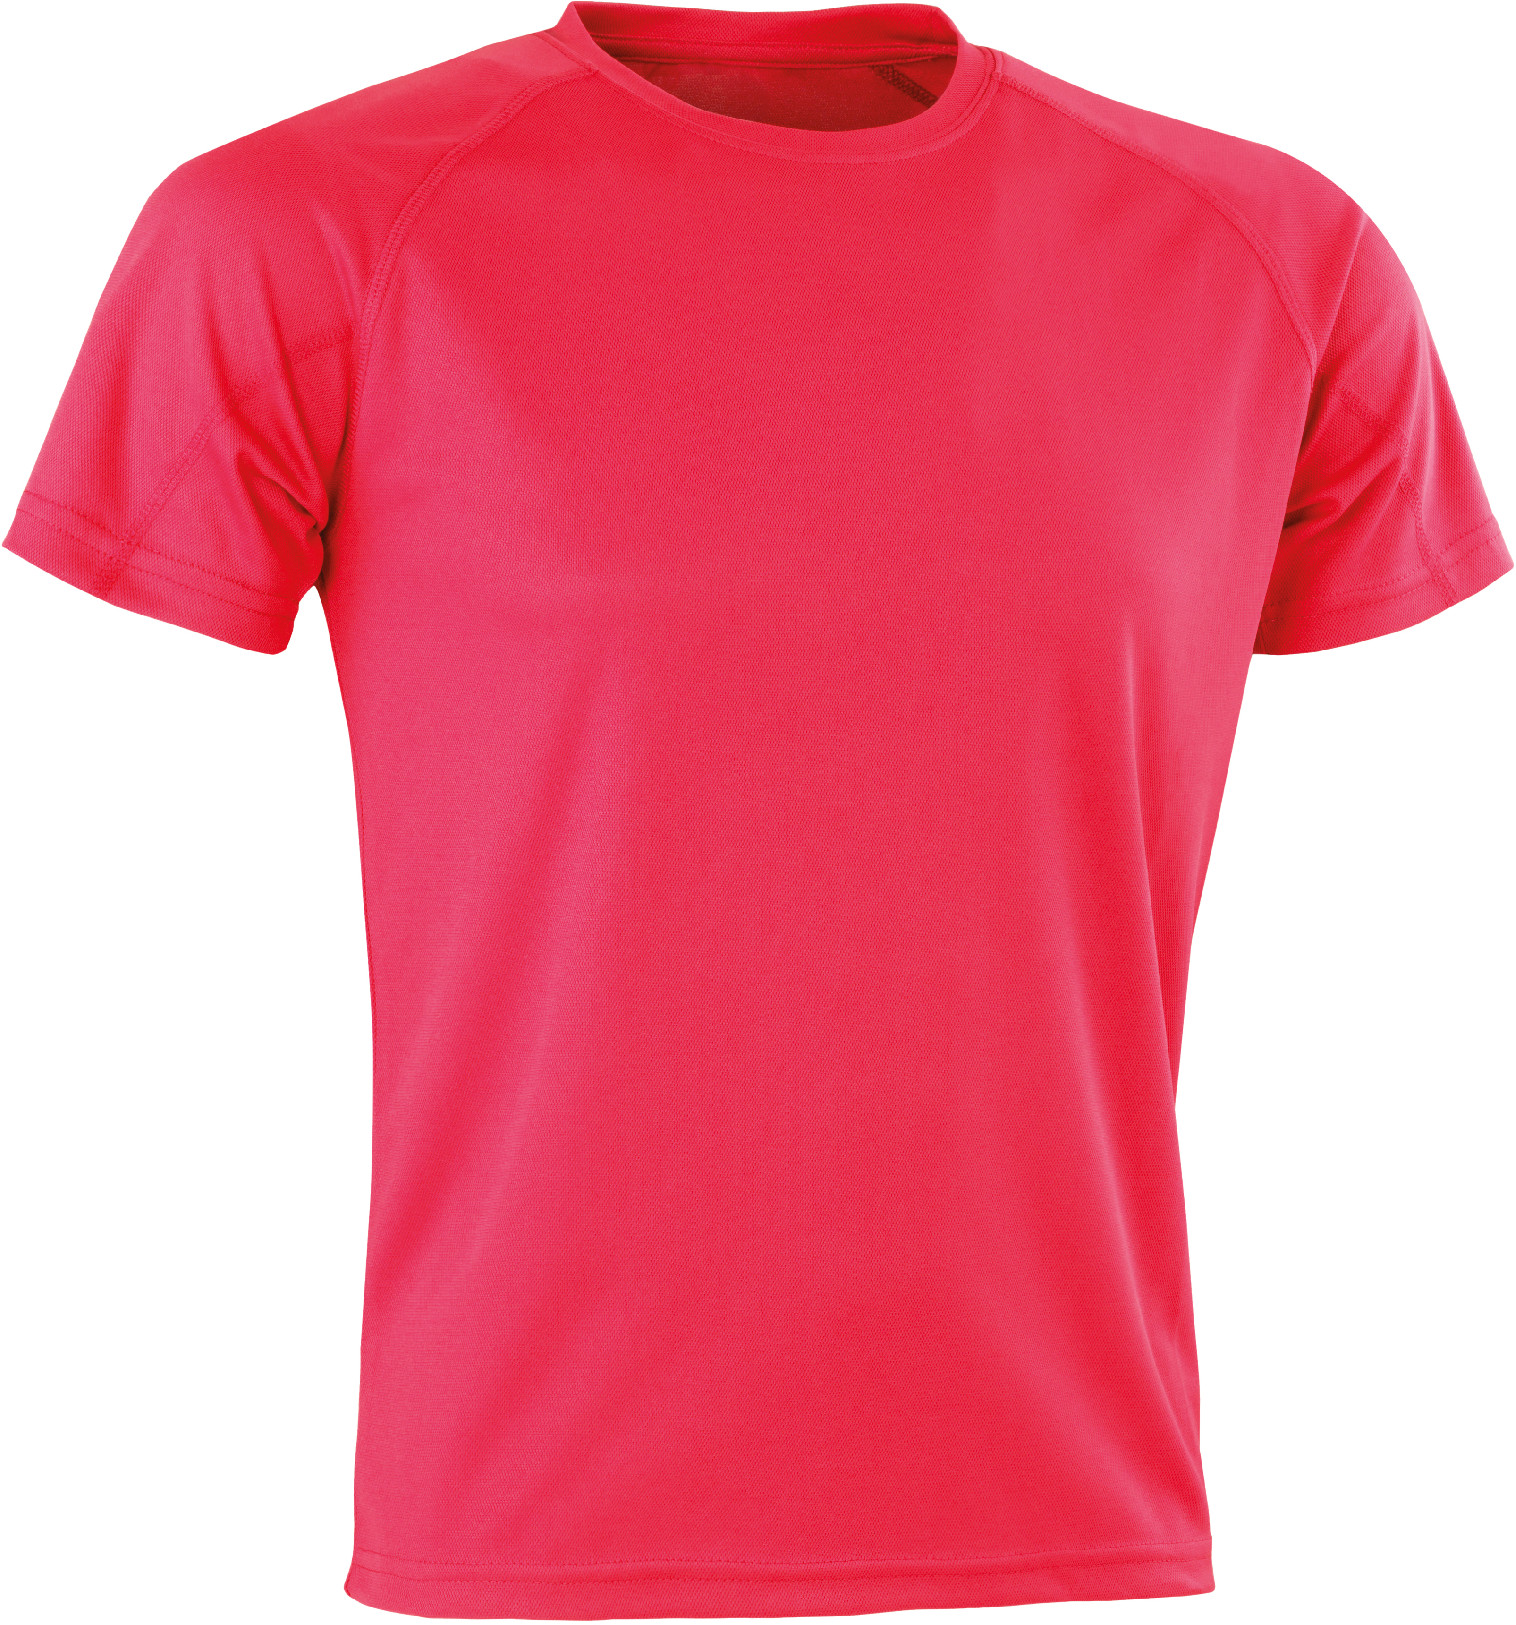 Sportovní tričko Aircool S287X Barva: neon pink, Velikost: M